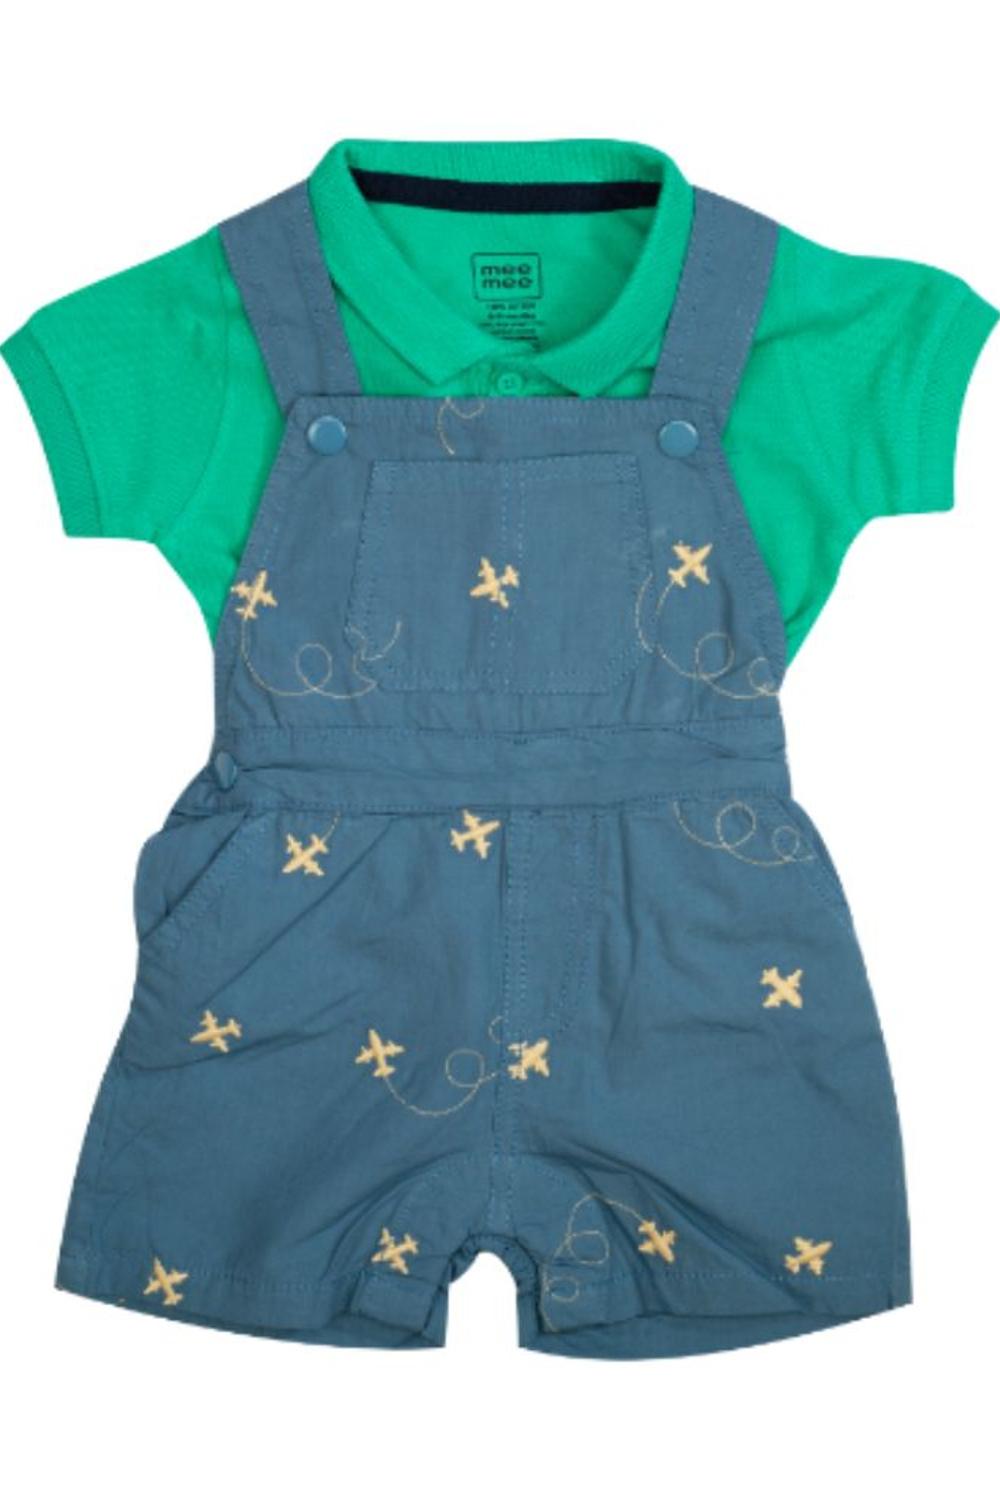 Mee Mee Baby Checks Shirt Printed Dungaree Set Green & Blue